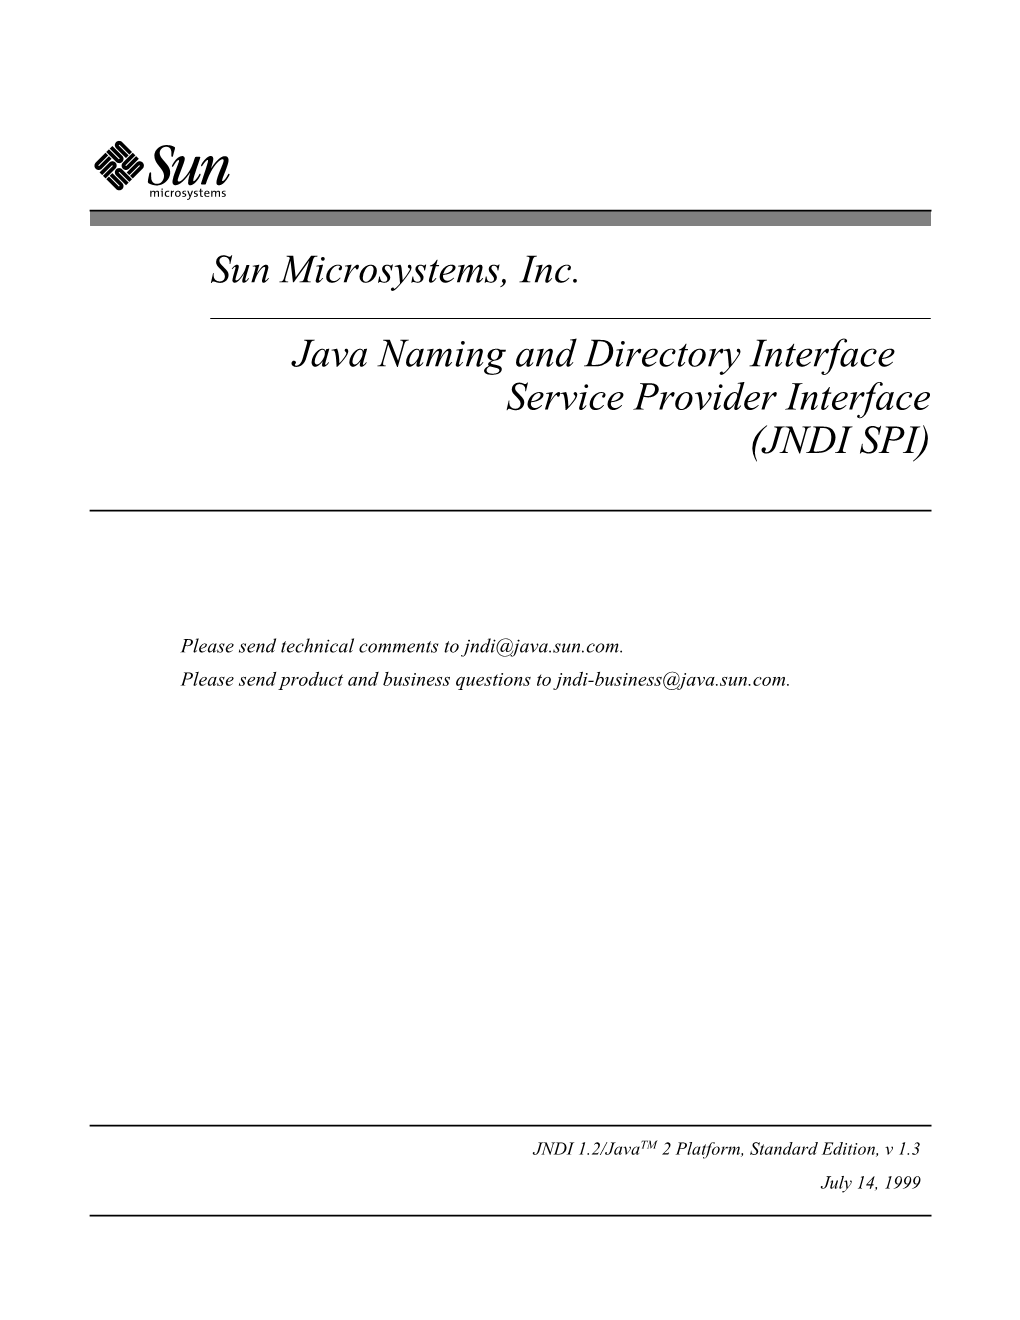 Java Naming and Directory Interface Service Provider Interface (JNDI SPI)